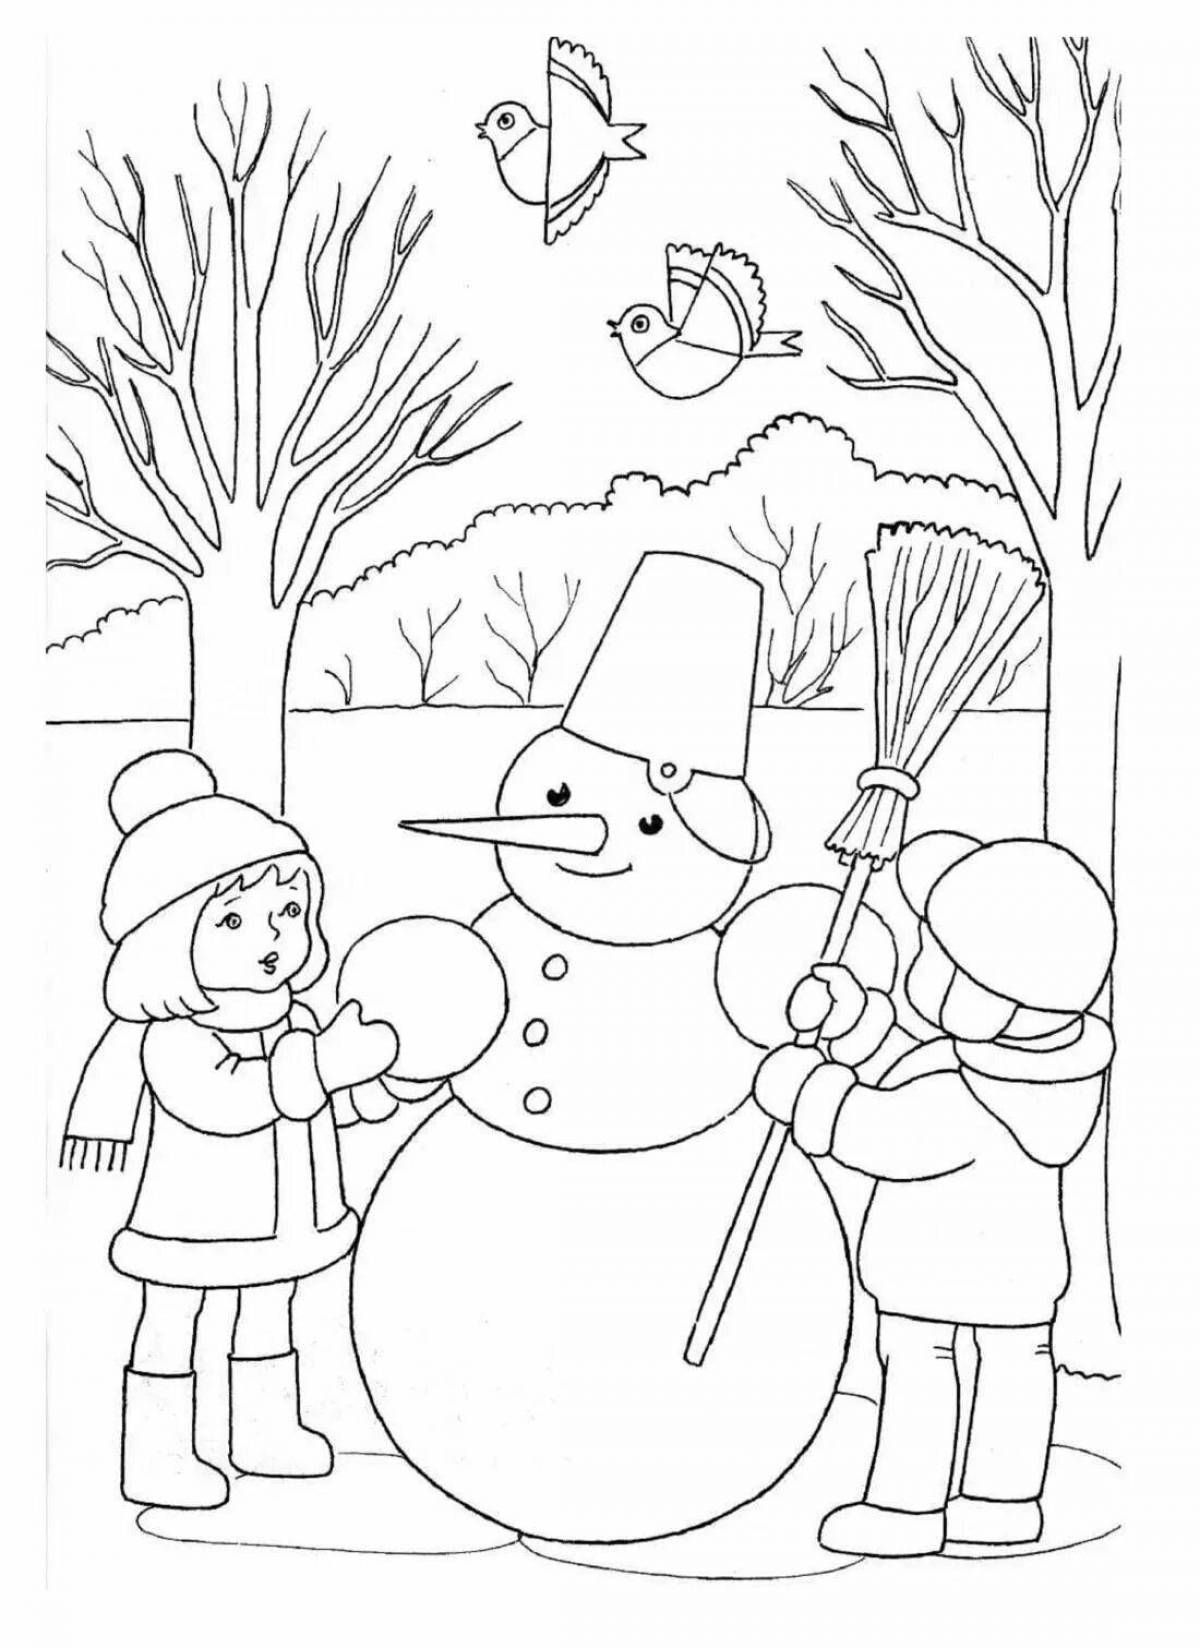 Winter animals coloring for schoolchildren